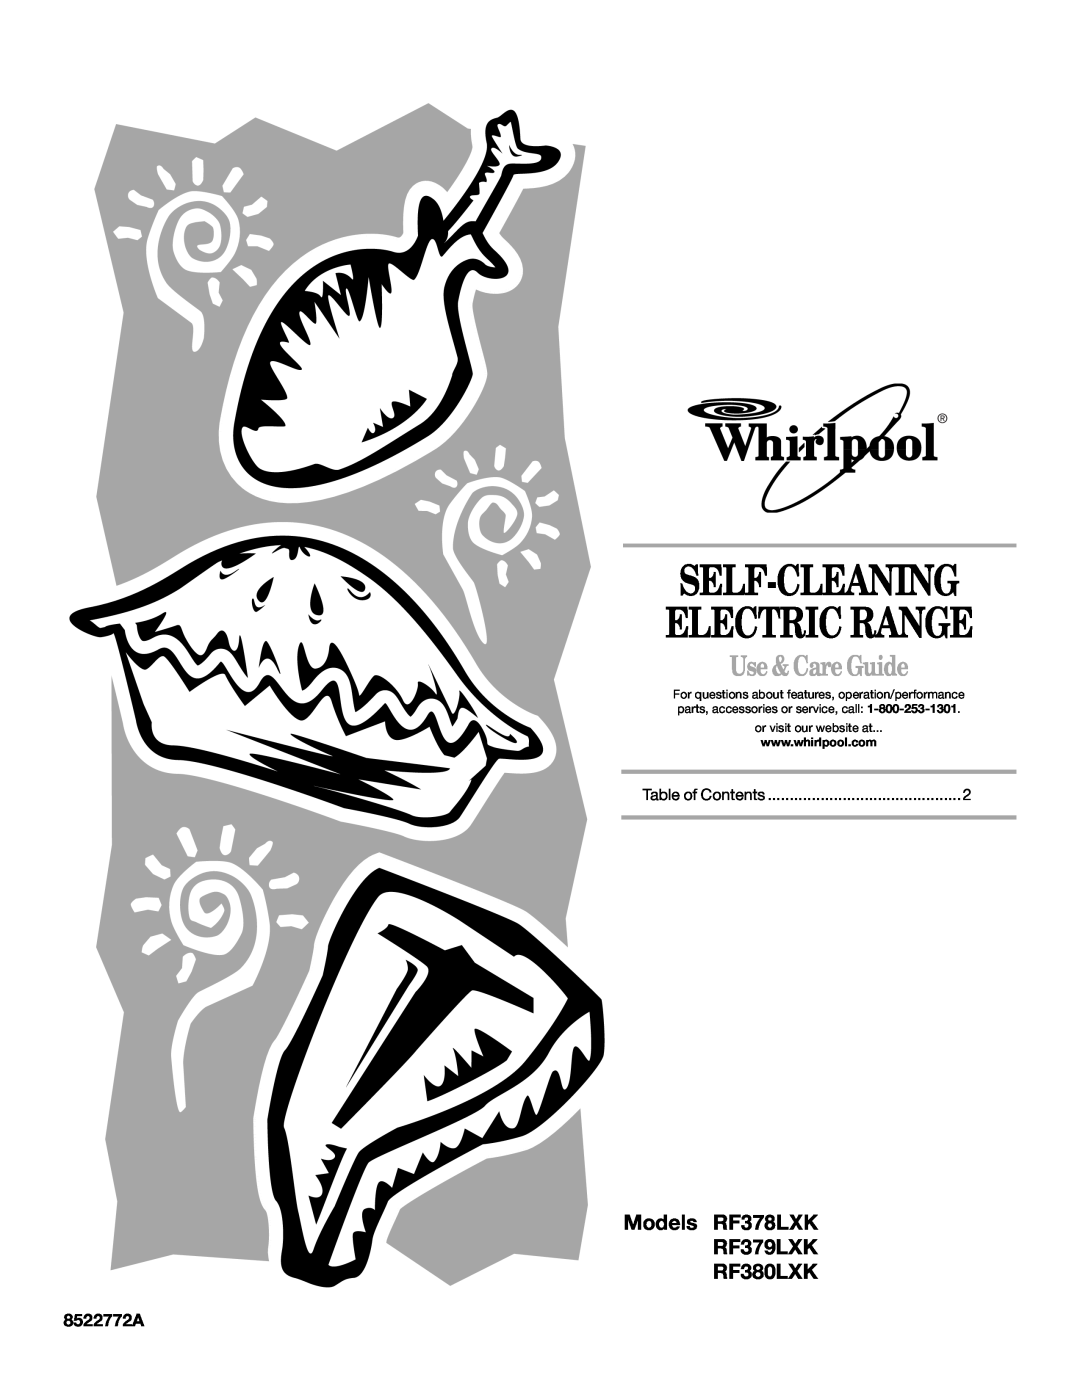 Whirlpool manual Self-Cleaning Electric Range, Use & Care Guide, Models RF378LXK, 8522772A, RF379LXK RF380LXK 